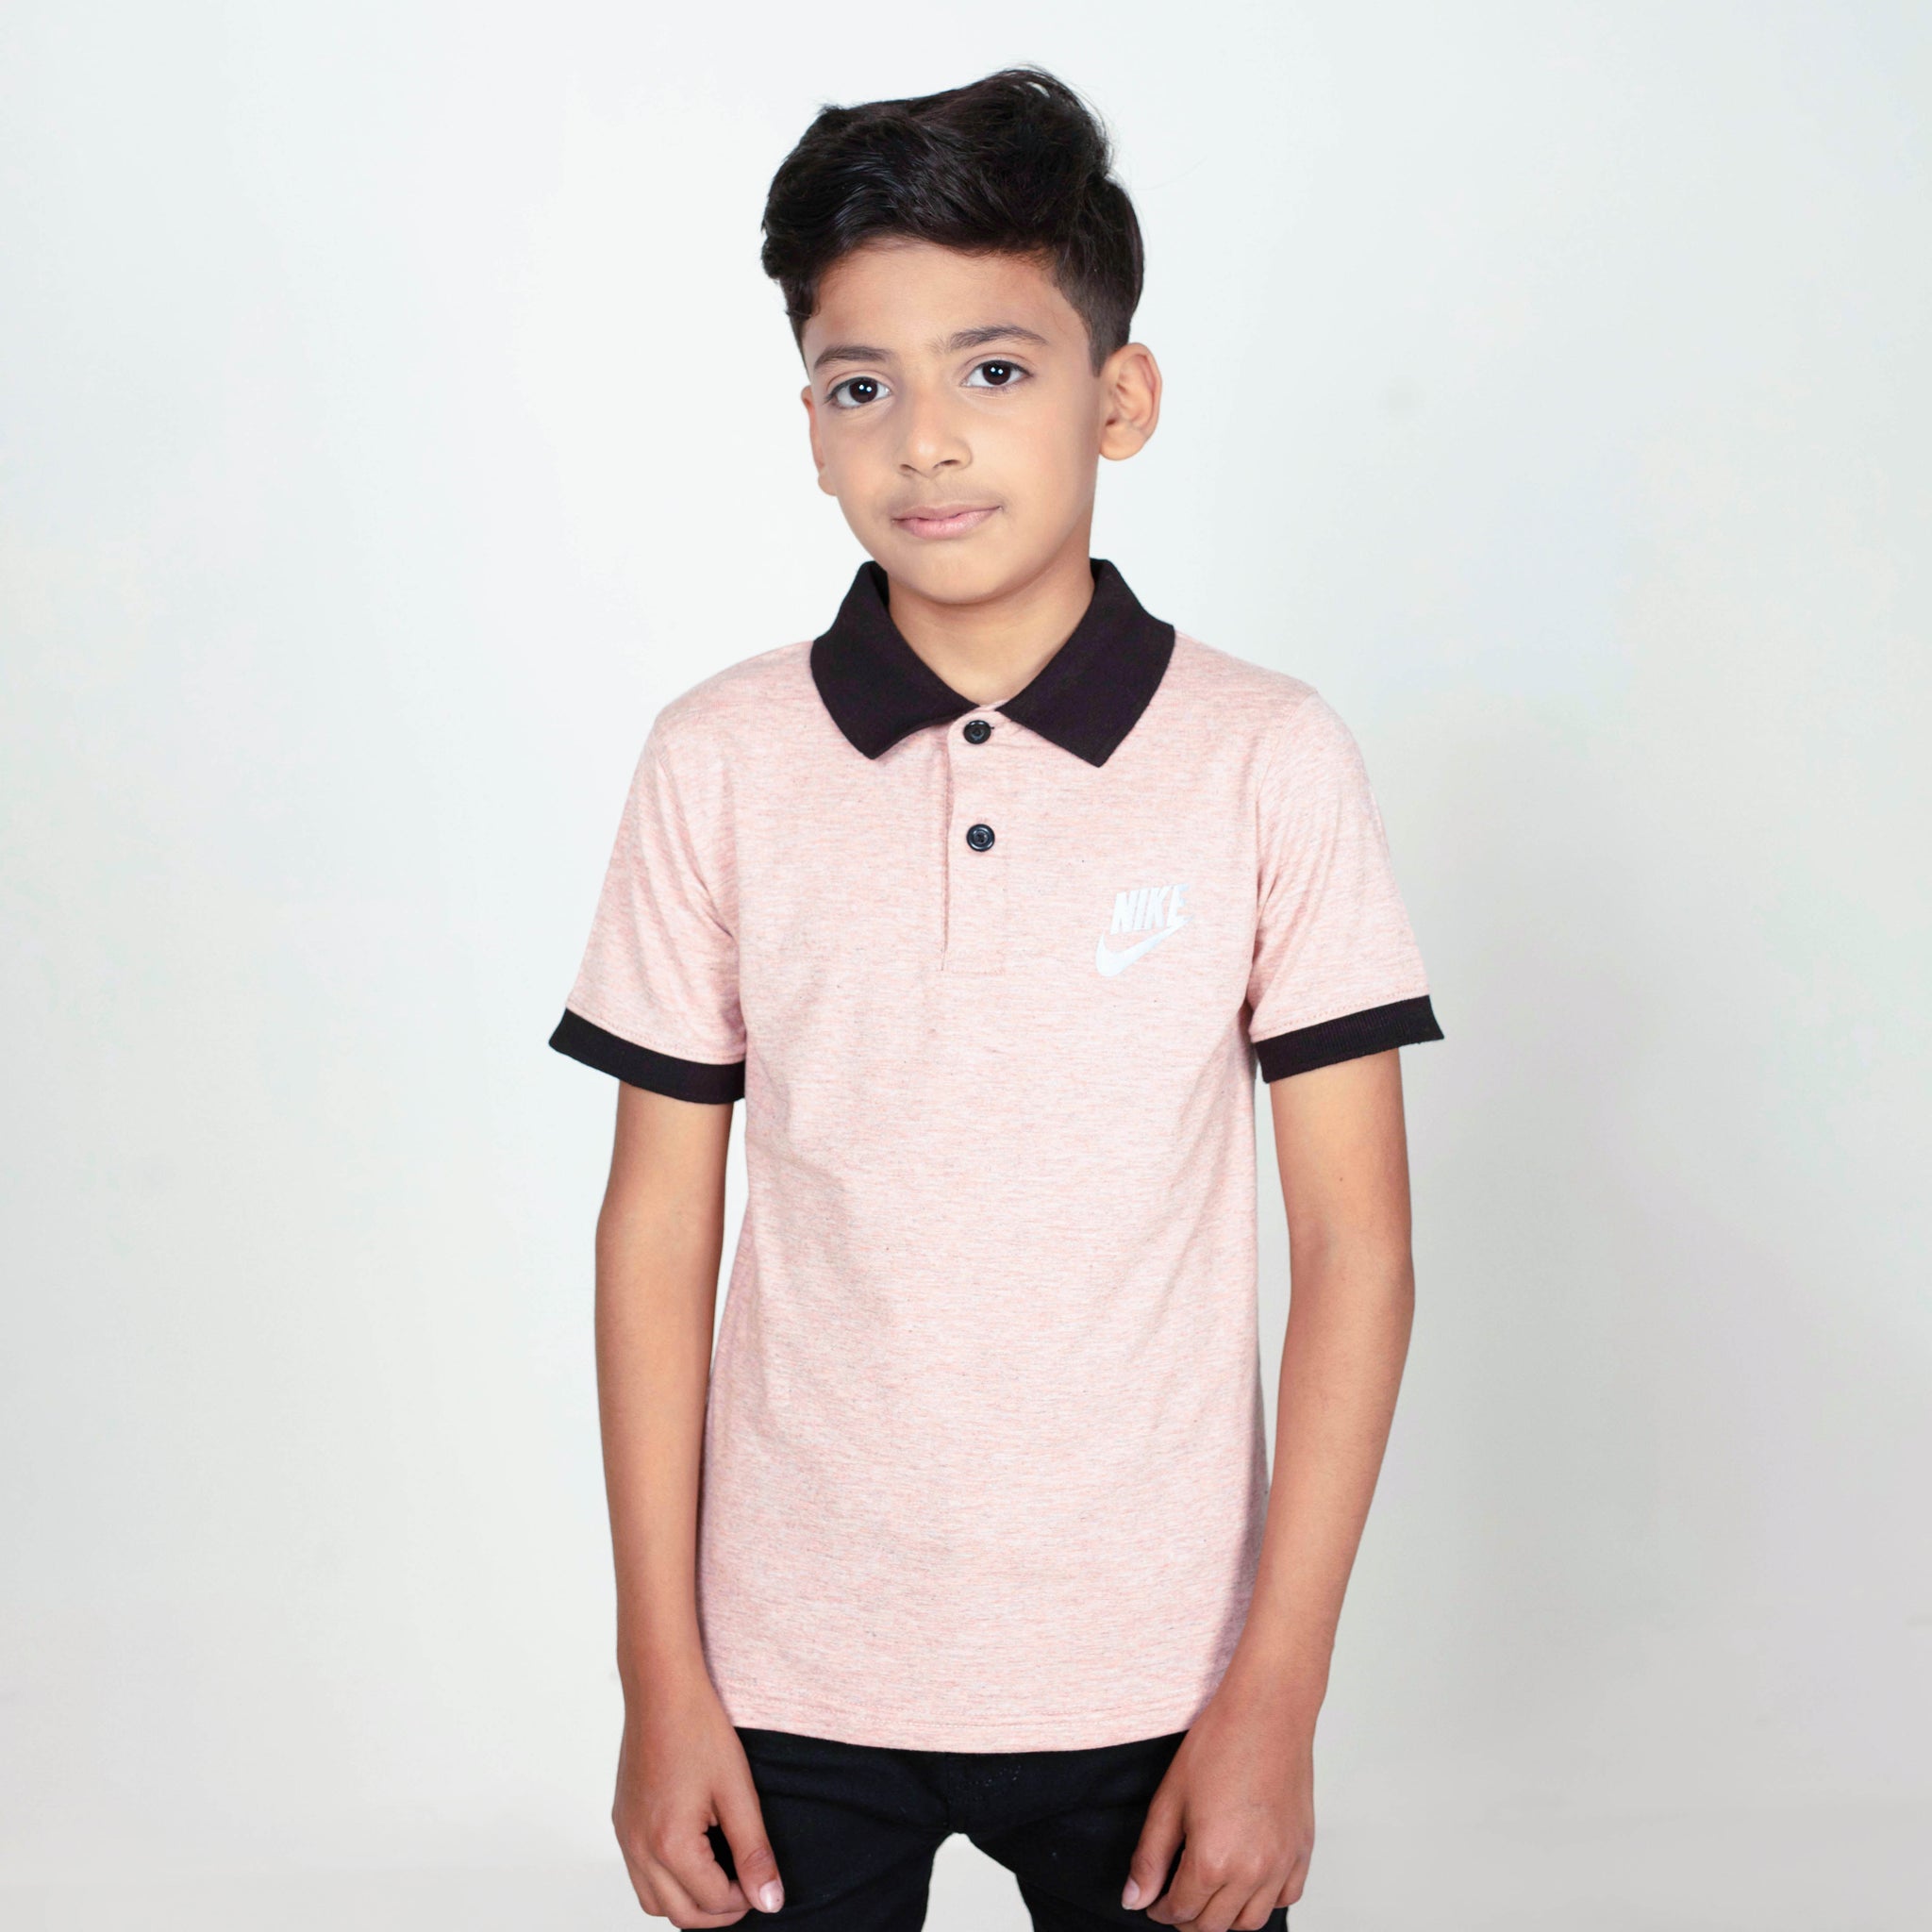 Junior Classic - Cotton Lycra Boys Polo T-Shirt - Pink